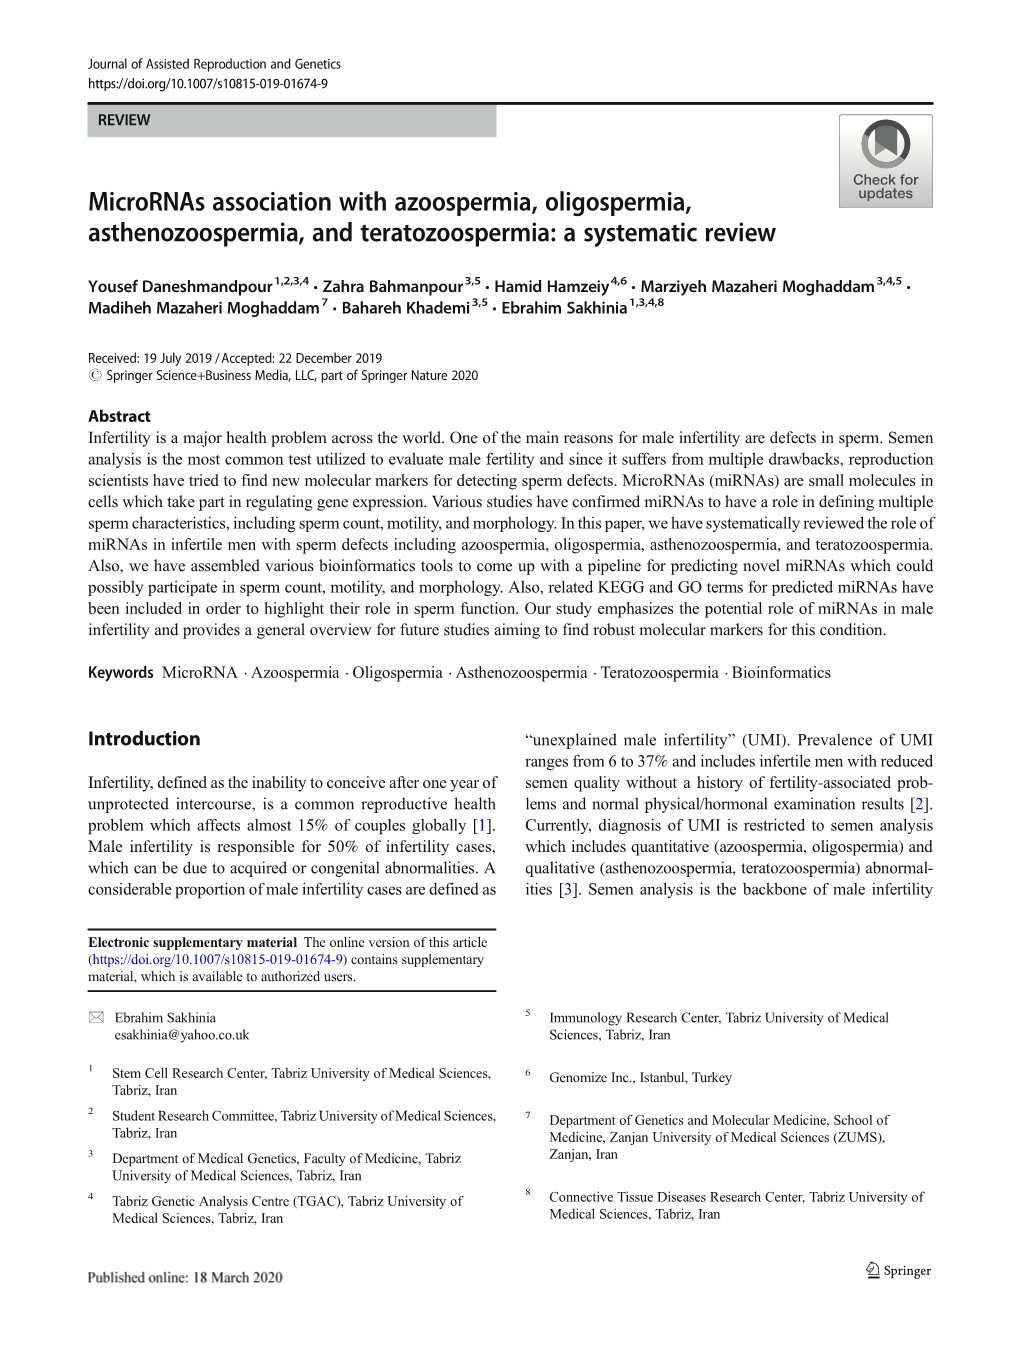 Micrornas Association with Azoospermia, Oligospermia, Asthenozoospermia, and Teratozoospermia: a Systematic Review